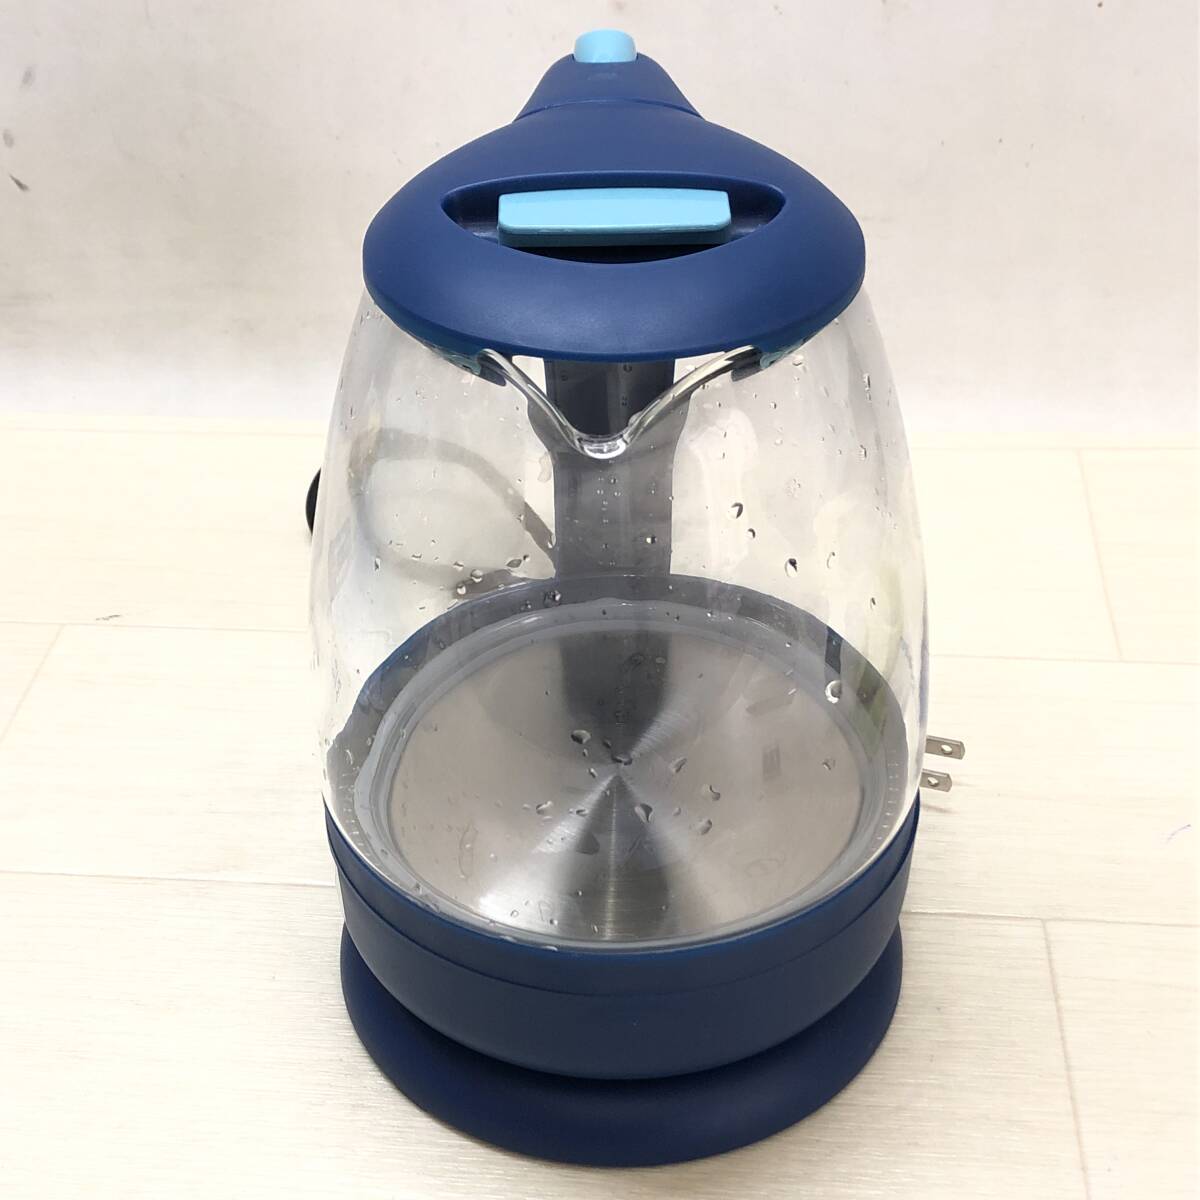 !marie claire Mali * clair MC-713L AquaGlass electric kettle hot water dispenser 1.2L blue operation goods secondhand goods!K23003